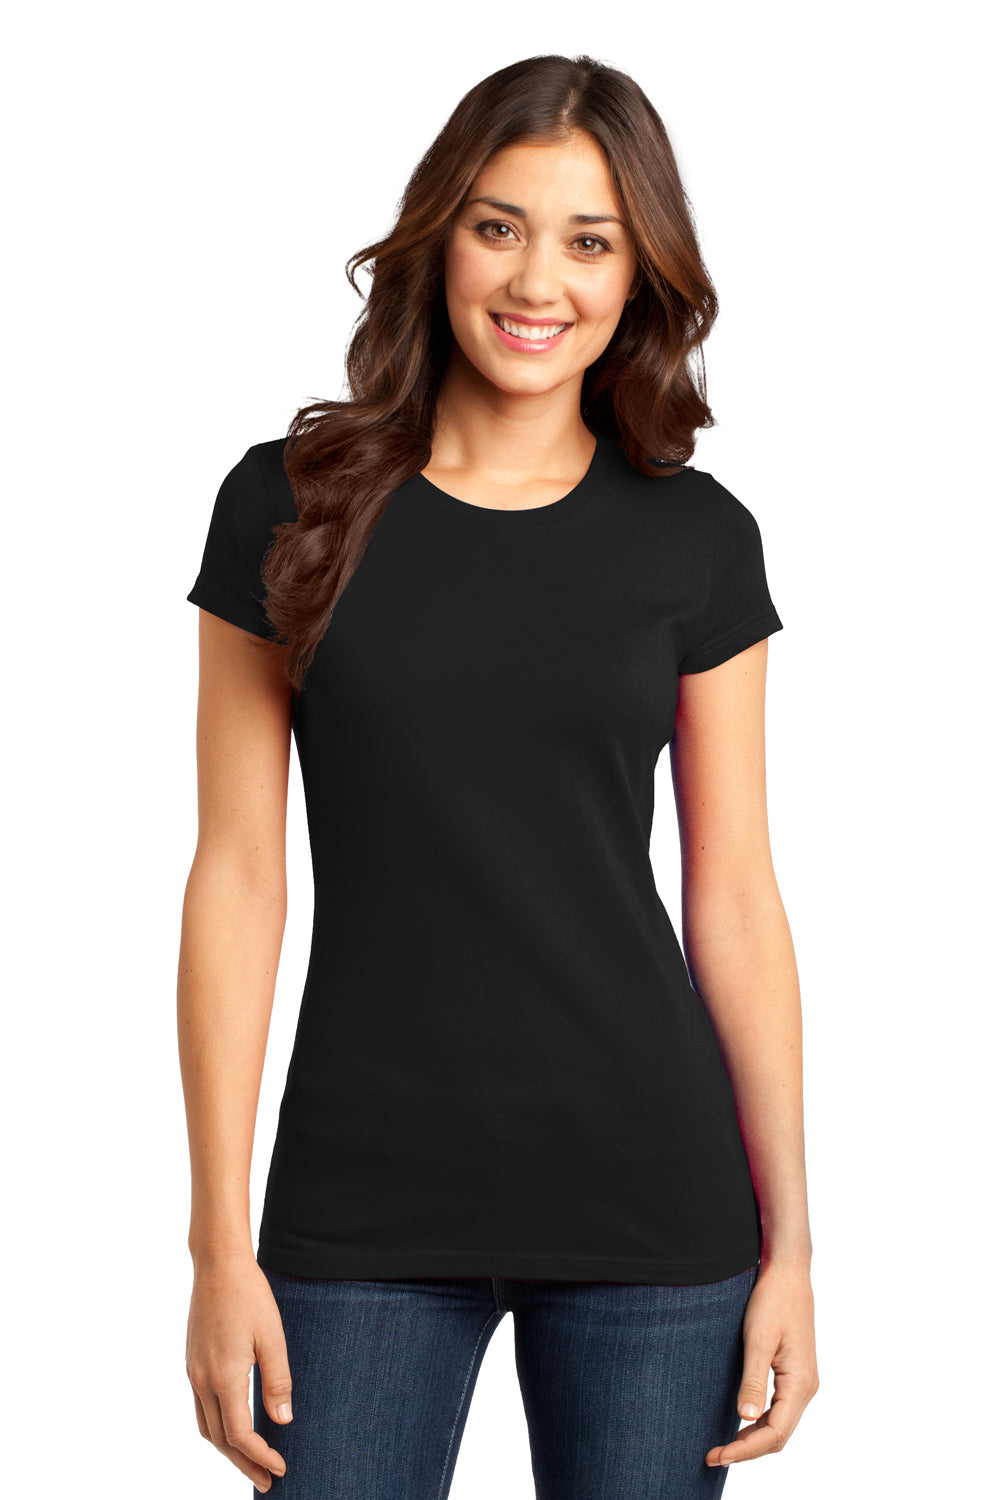 District DT6001 Womens Very Important Short Sleeve Crewneck T-Shirt Black Front